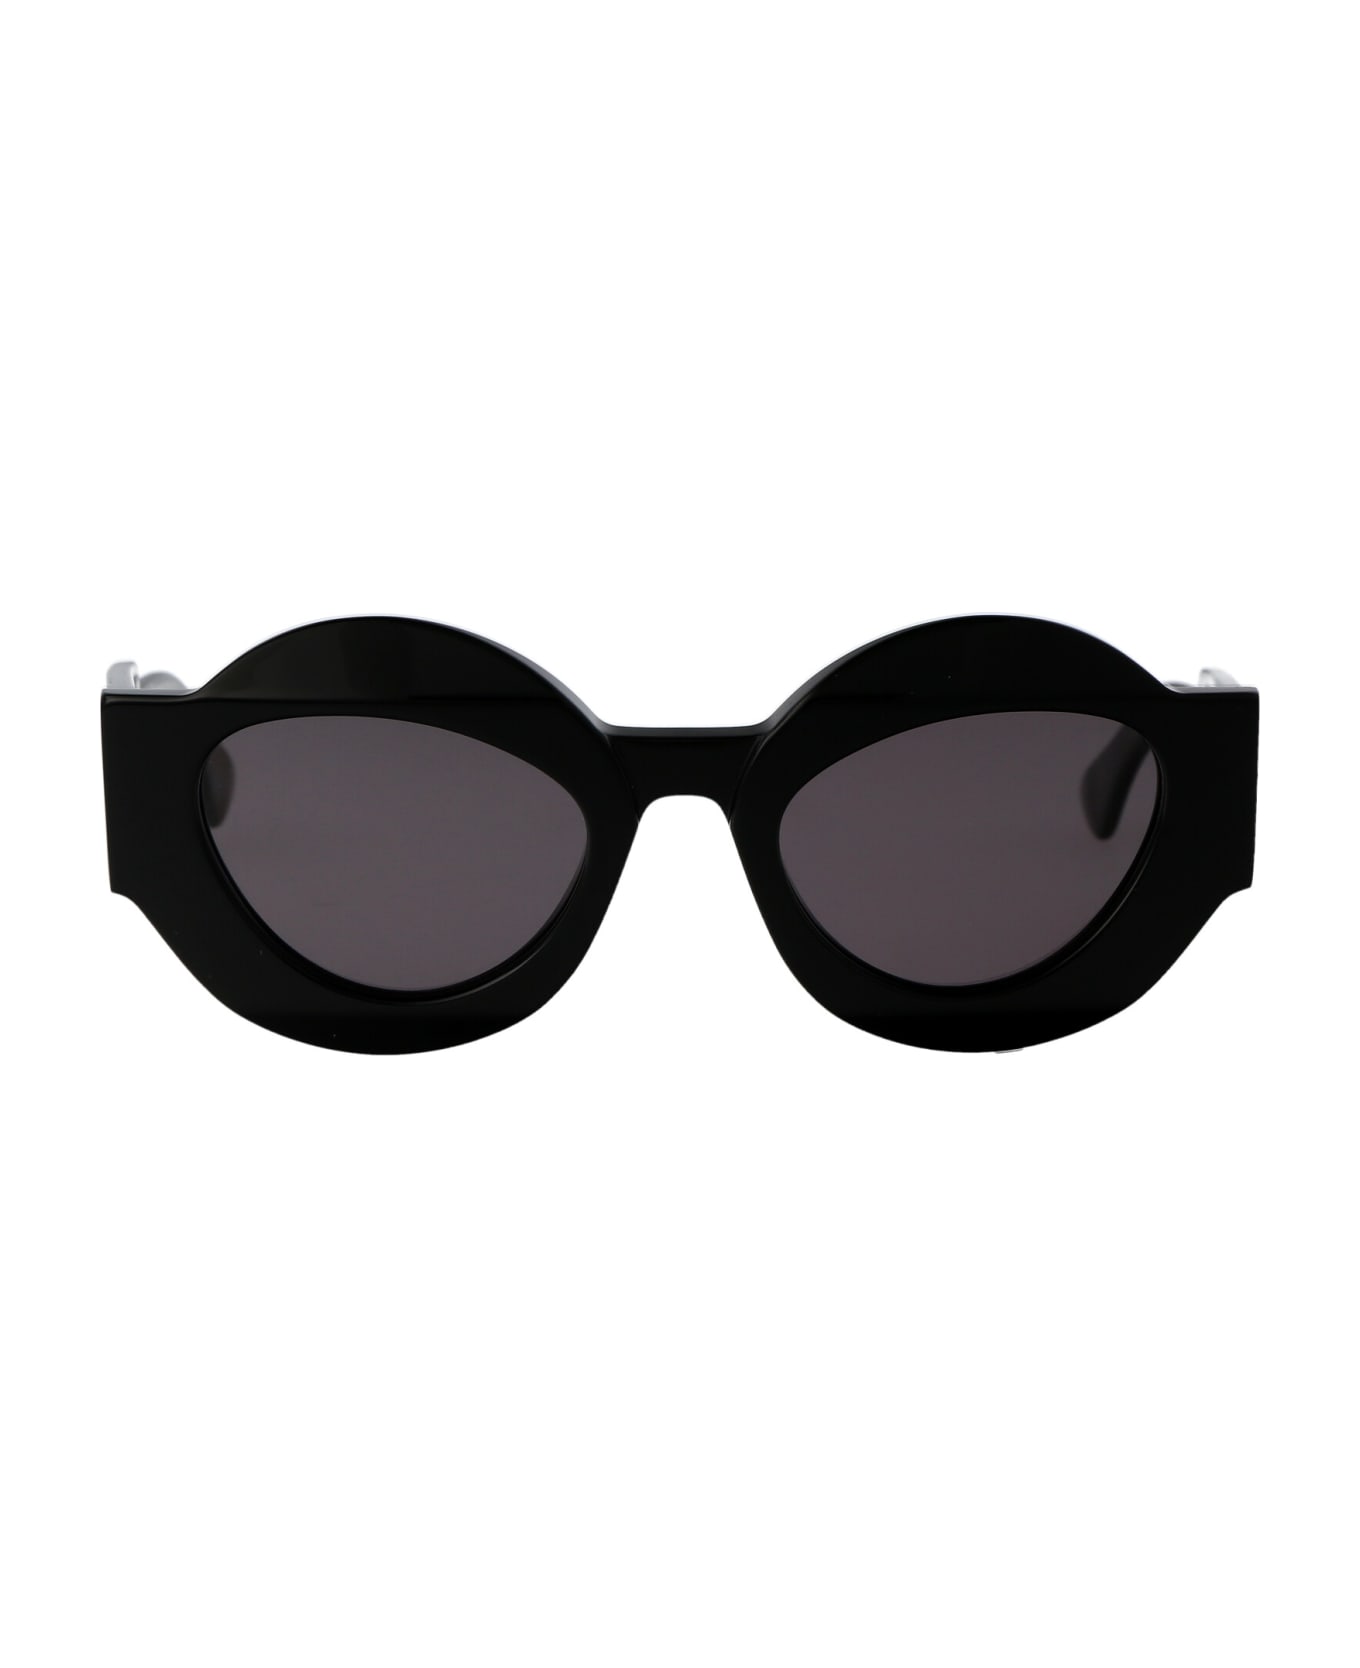 Kuboraum Maske X22 Sunglasses -  BS 2grey サングラス